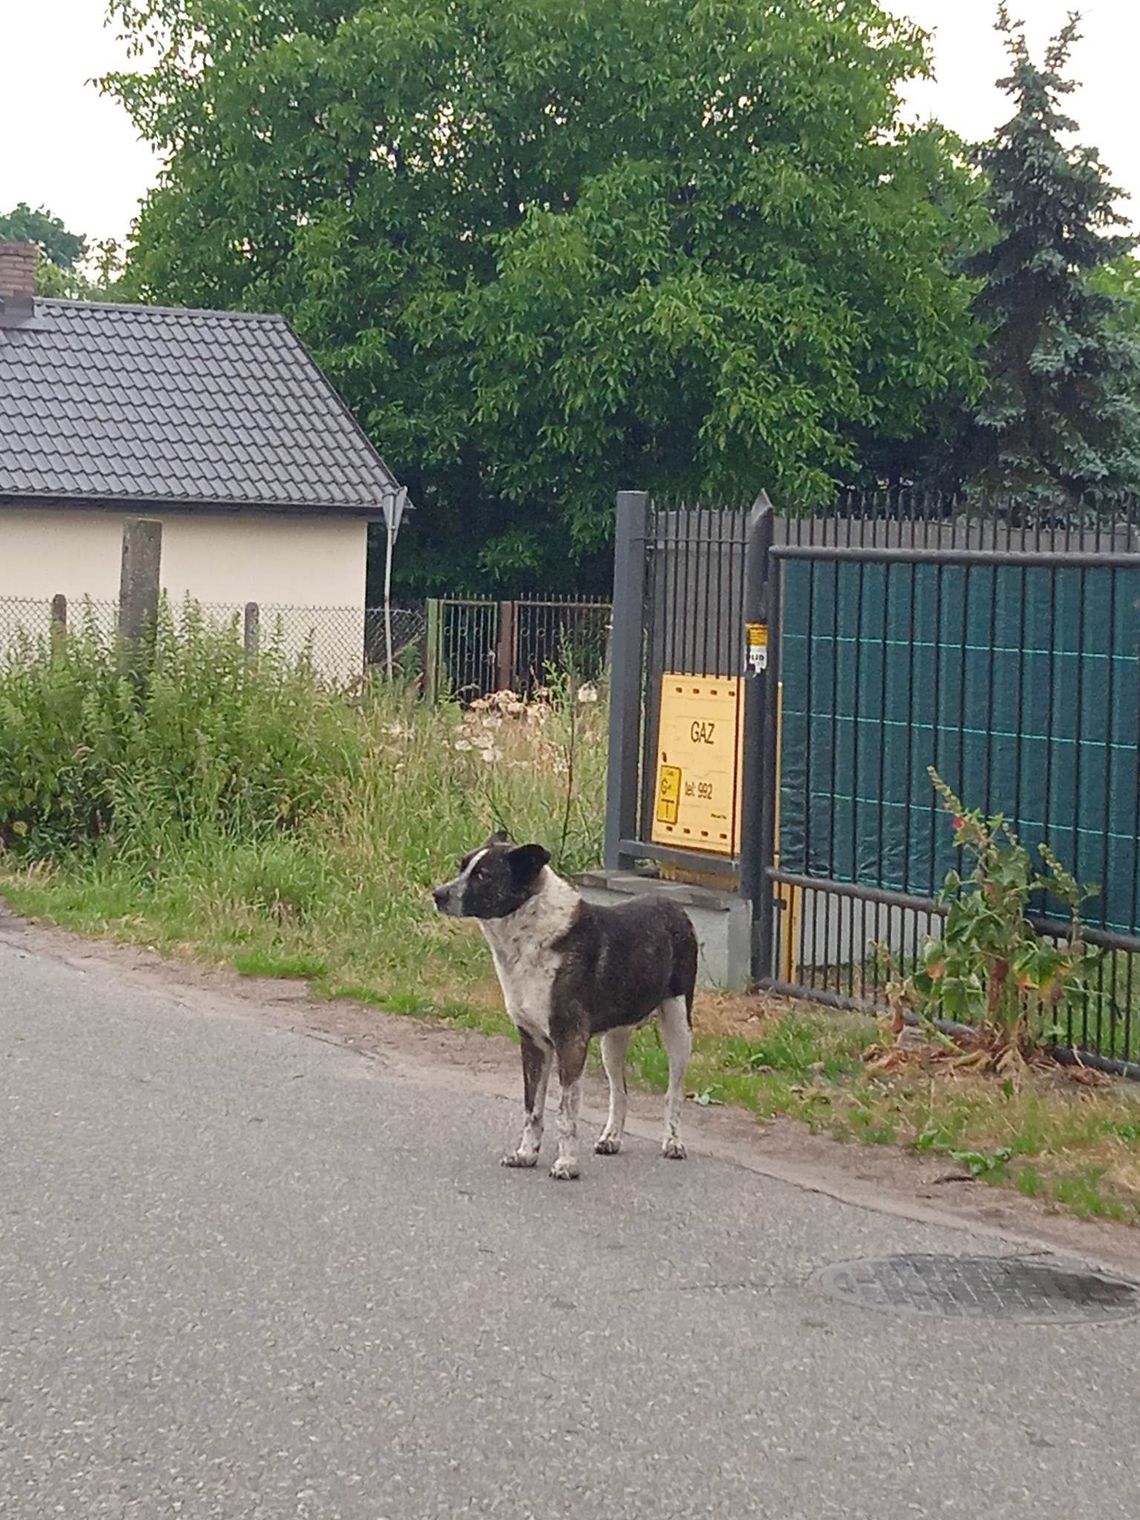 Bezdomny agresywny pies biega po Sochocinie. Gmina bezradnie rozkłada ręce